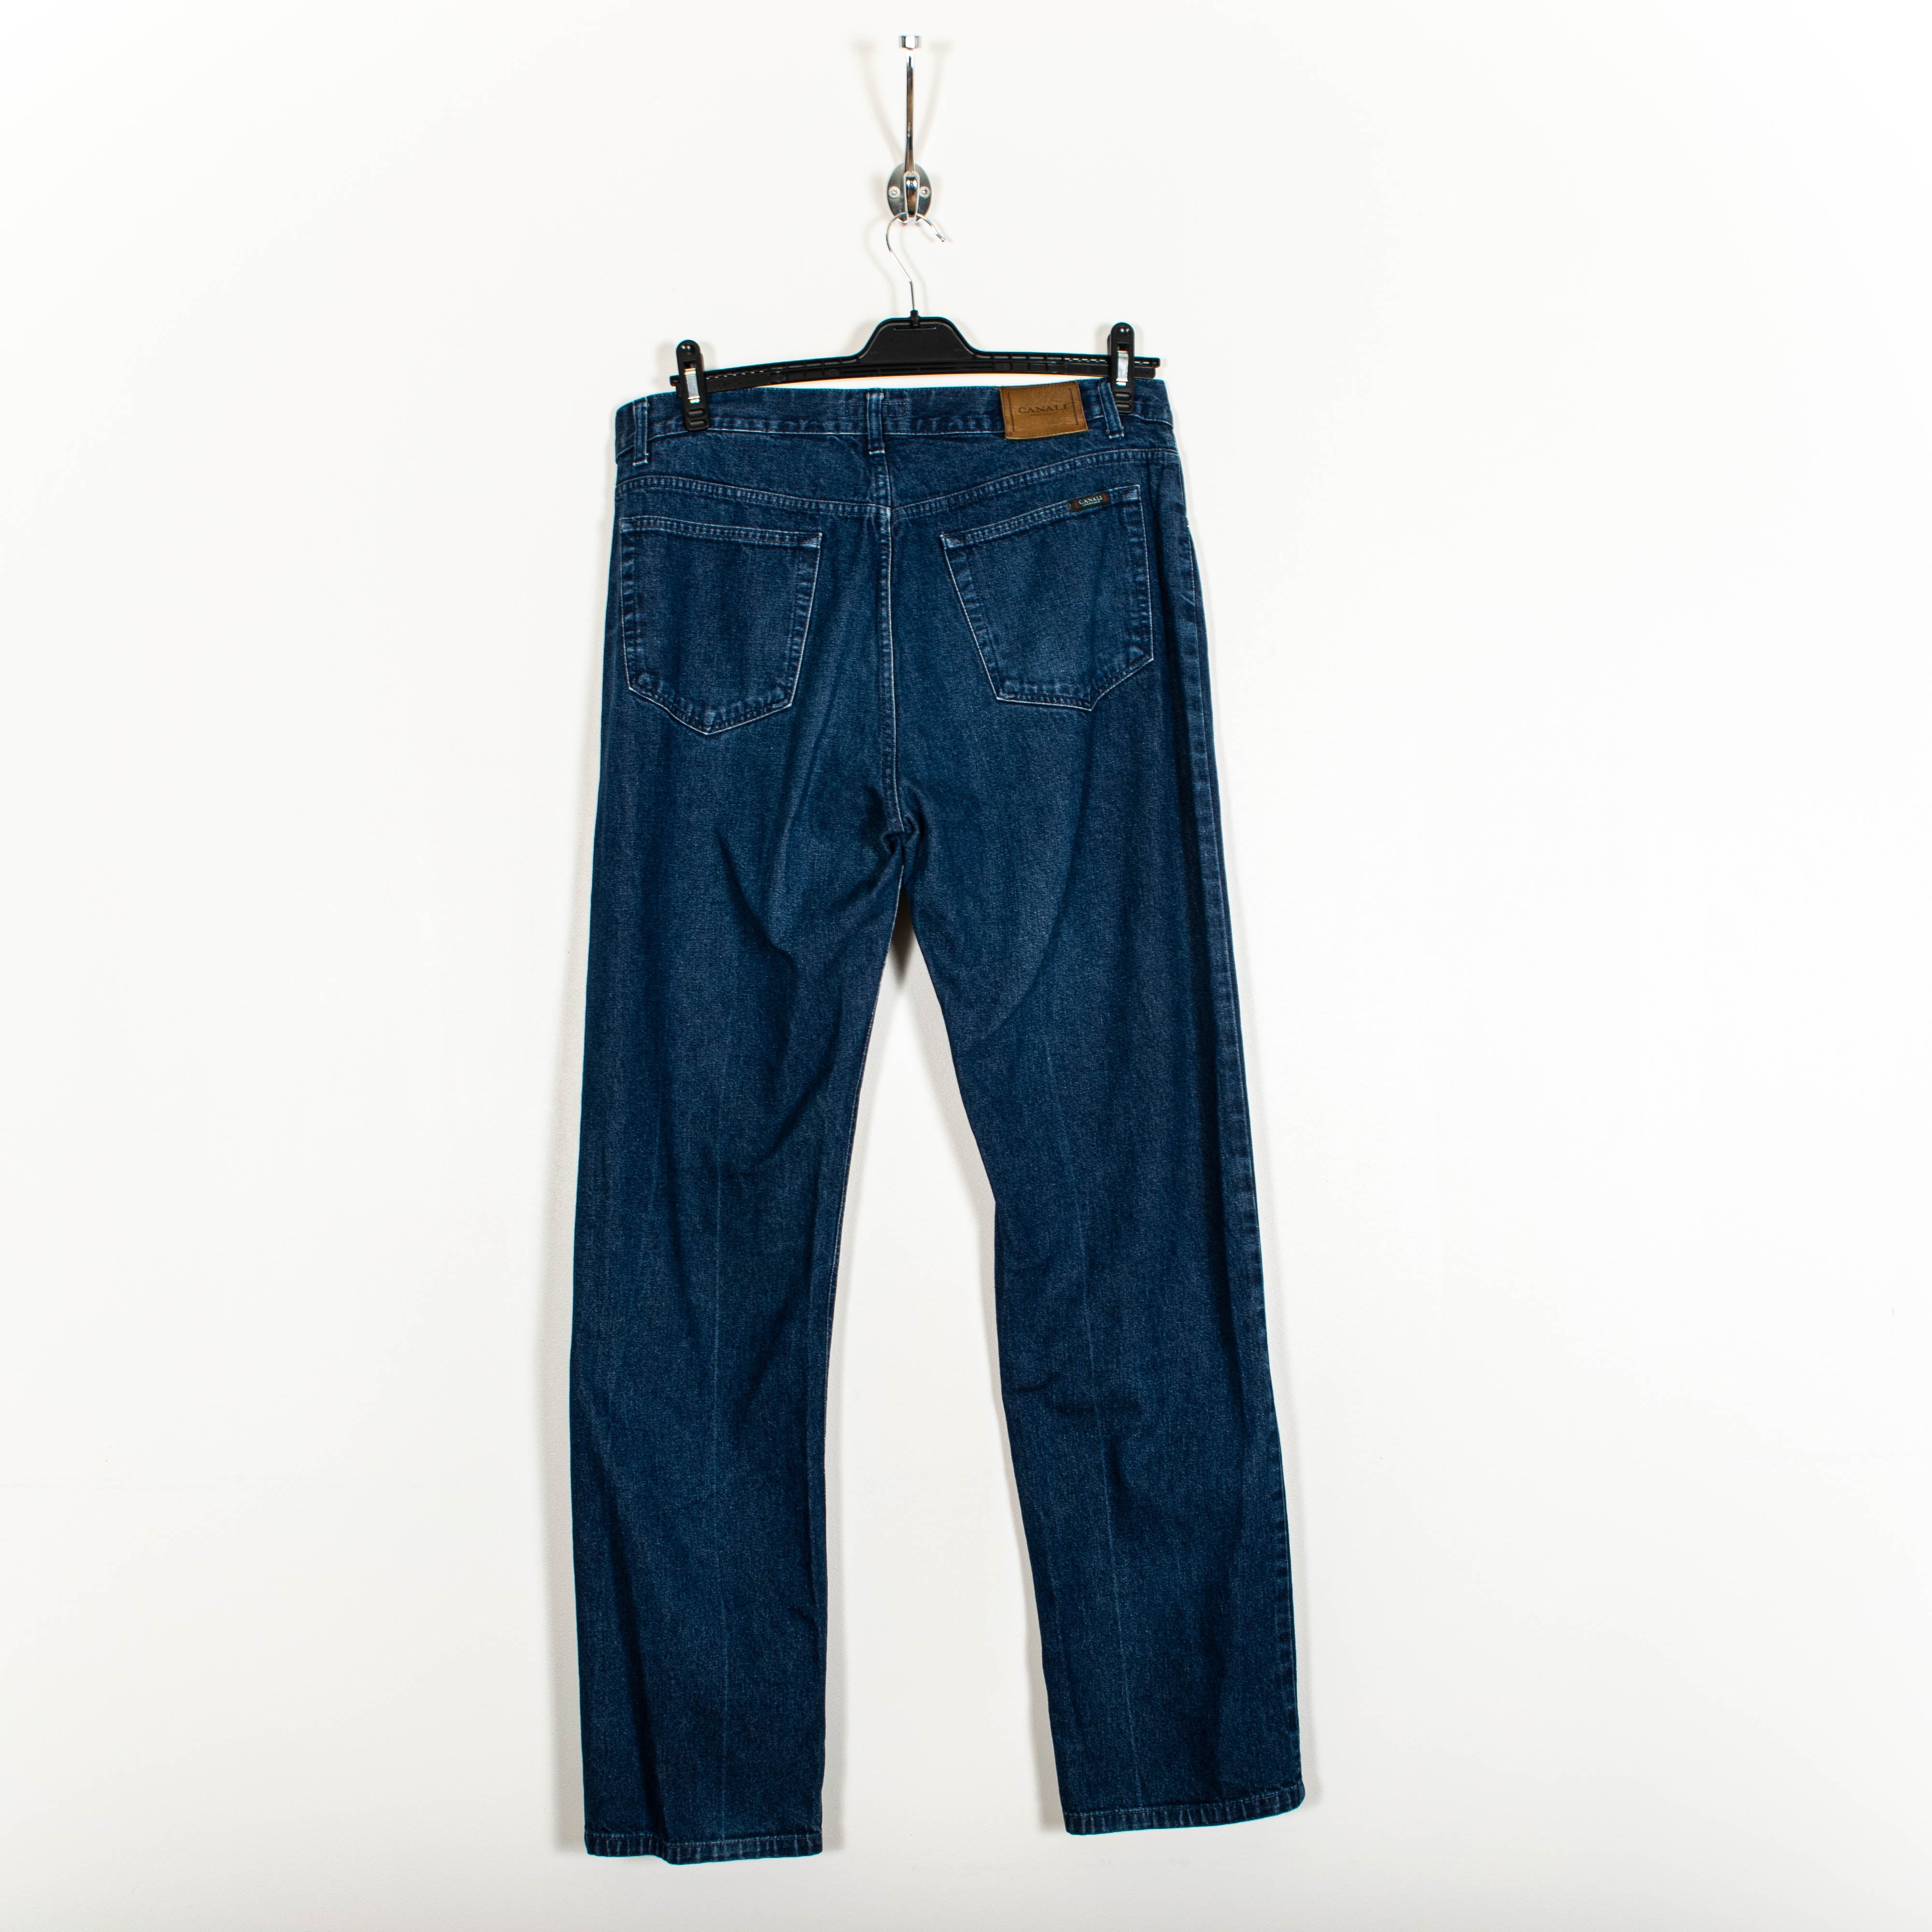 Vintage Canali Sportswear Dark Washed Straight Leg Jeans Mens US36